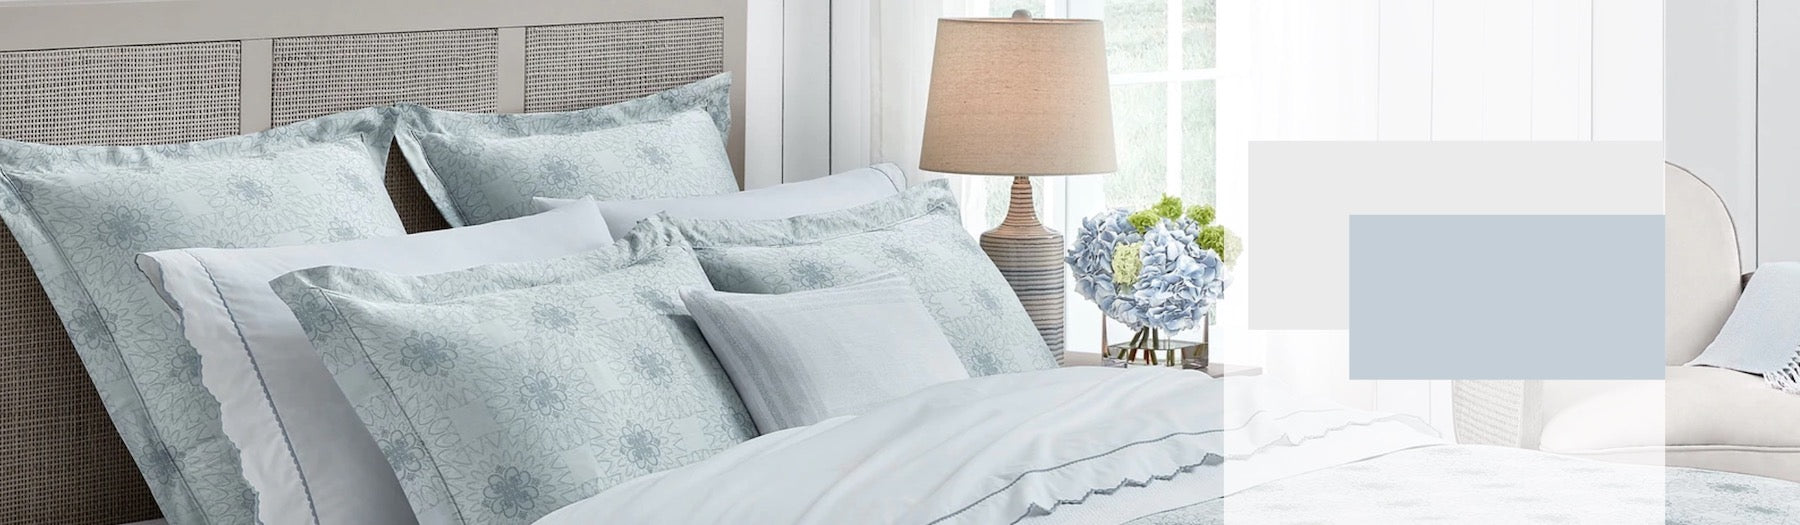 Sferra linens - bedding, bath towels, sheets, tablecloths - Sferra luxury fine linens at Fig Linens and Home